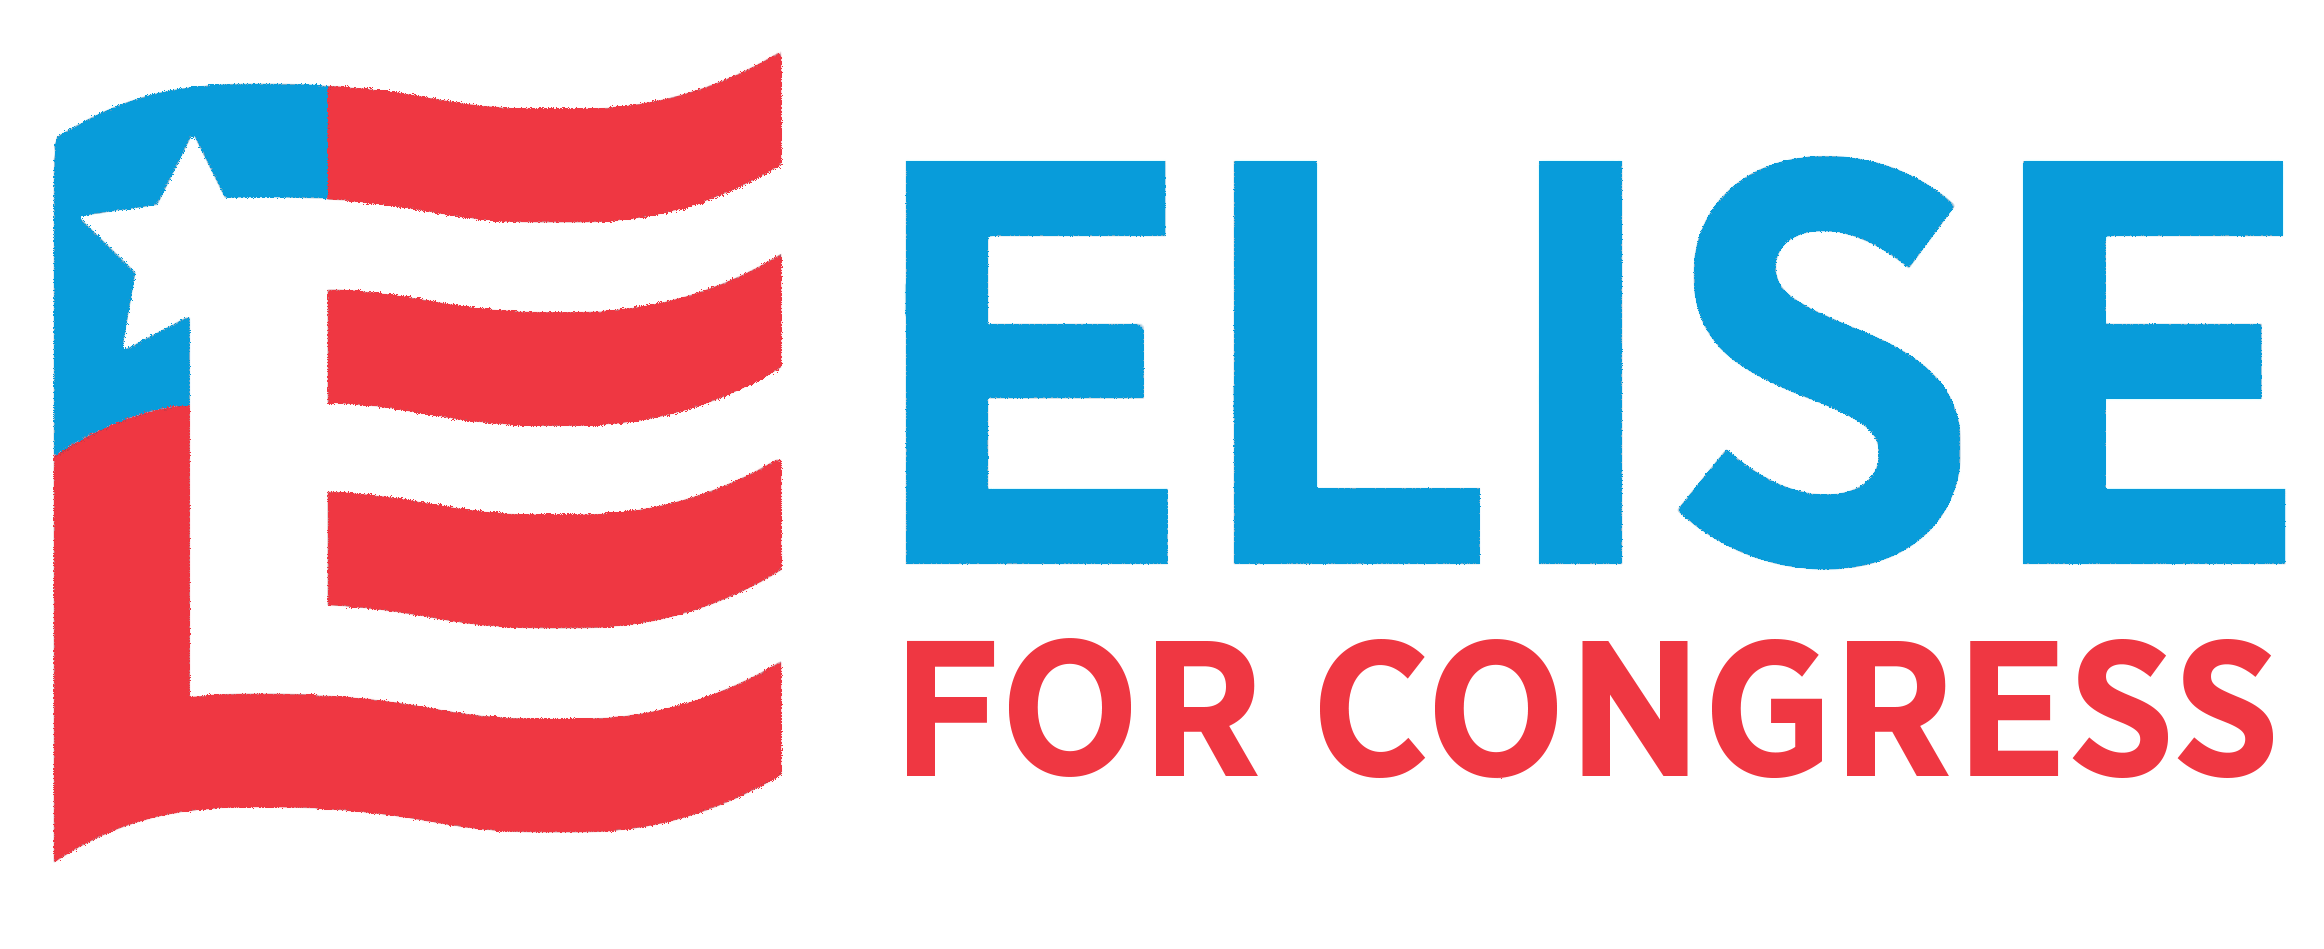 Elise congress wordmark two color 2.0 copy